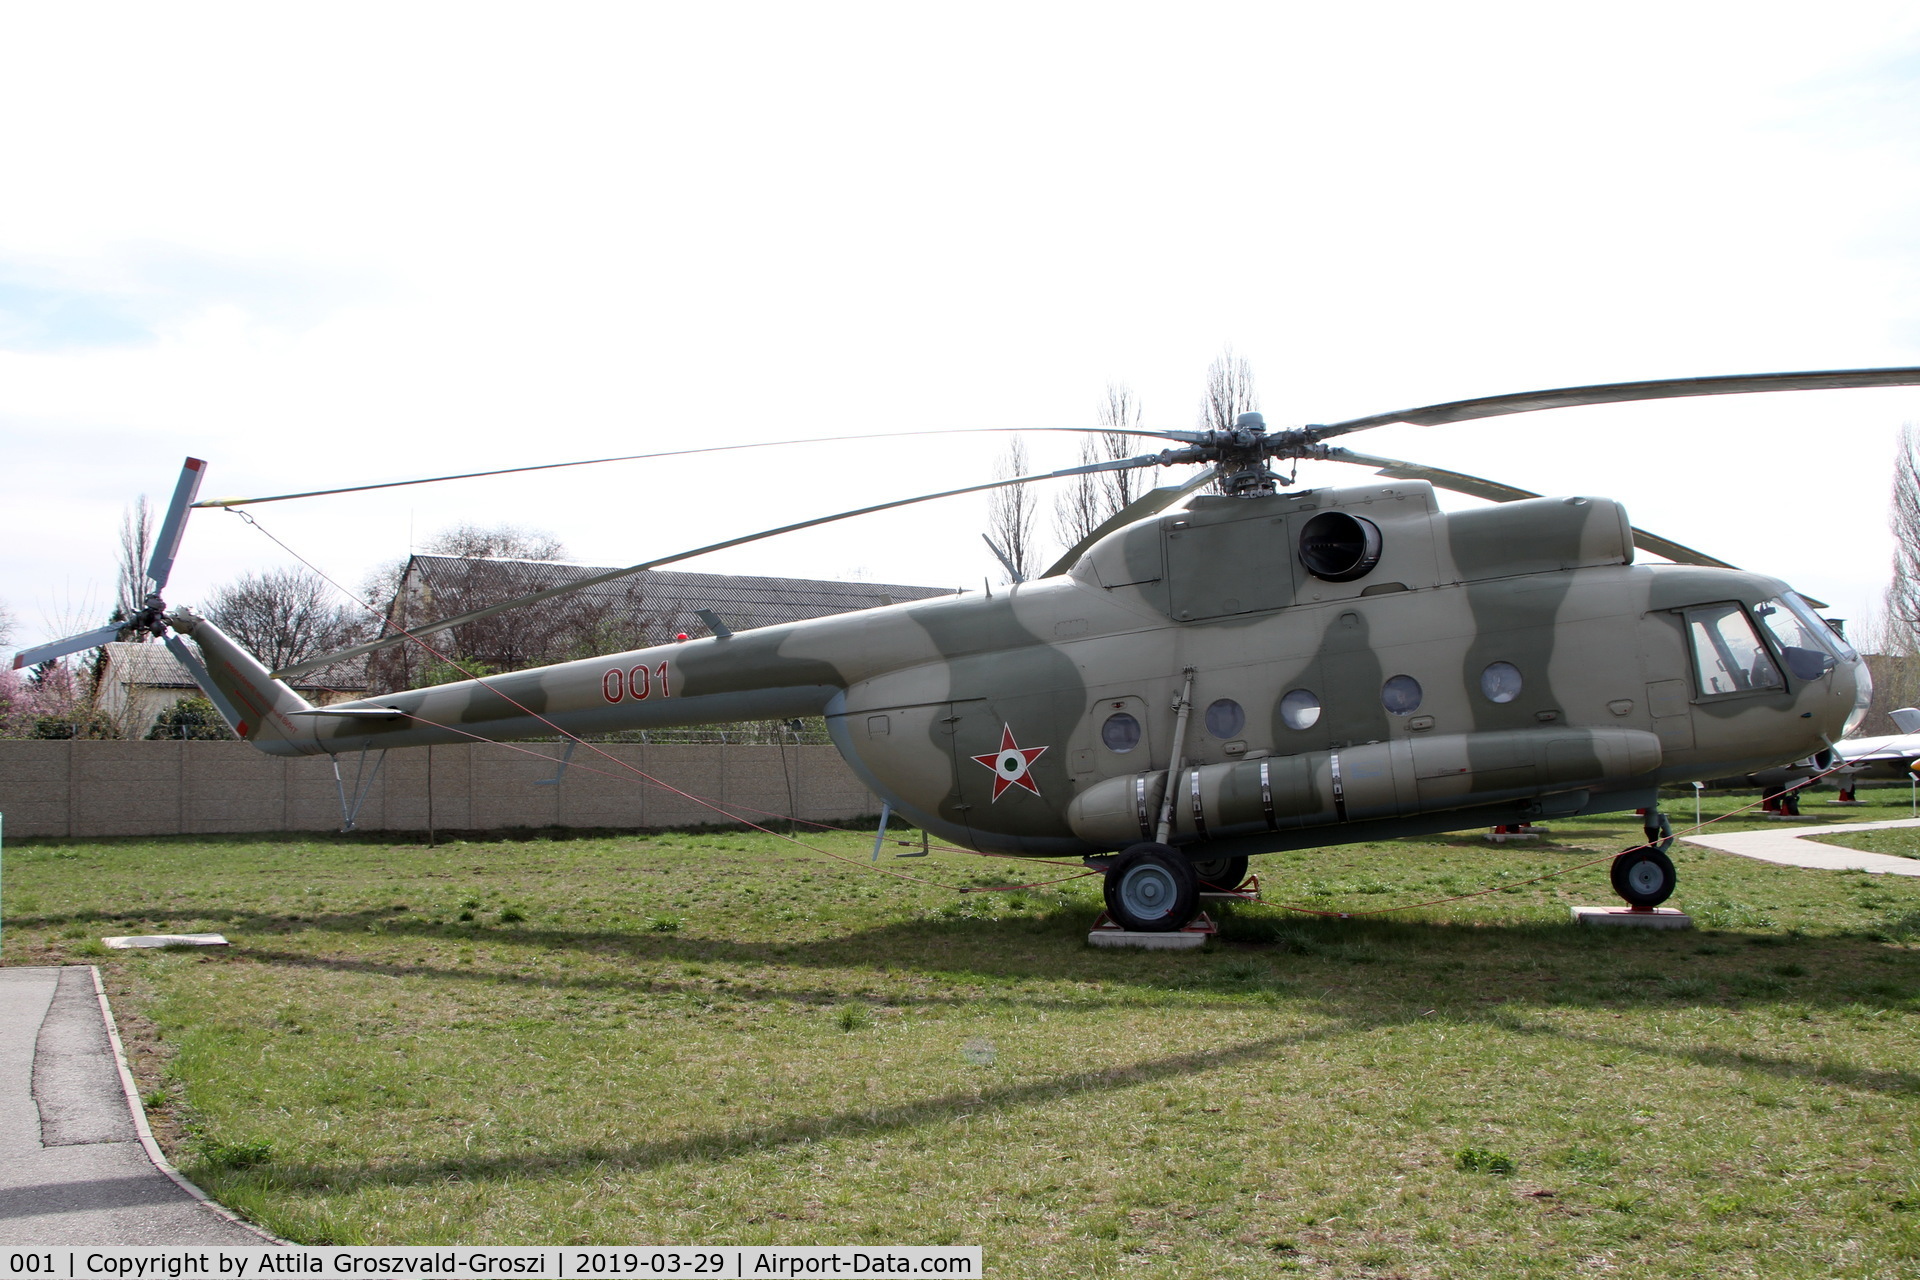 001, 1983 Mil Mi-9 C/N 001, RepTár. Szolnok aviation history museum, Hungary